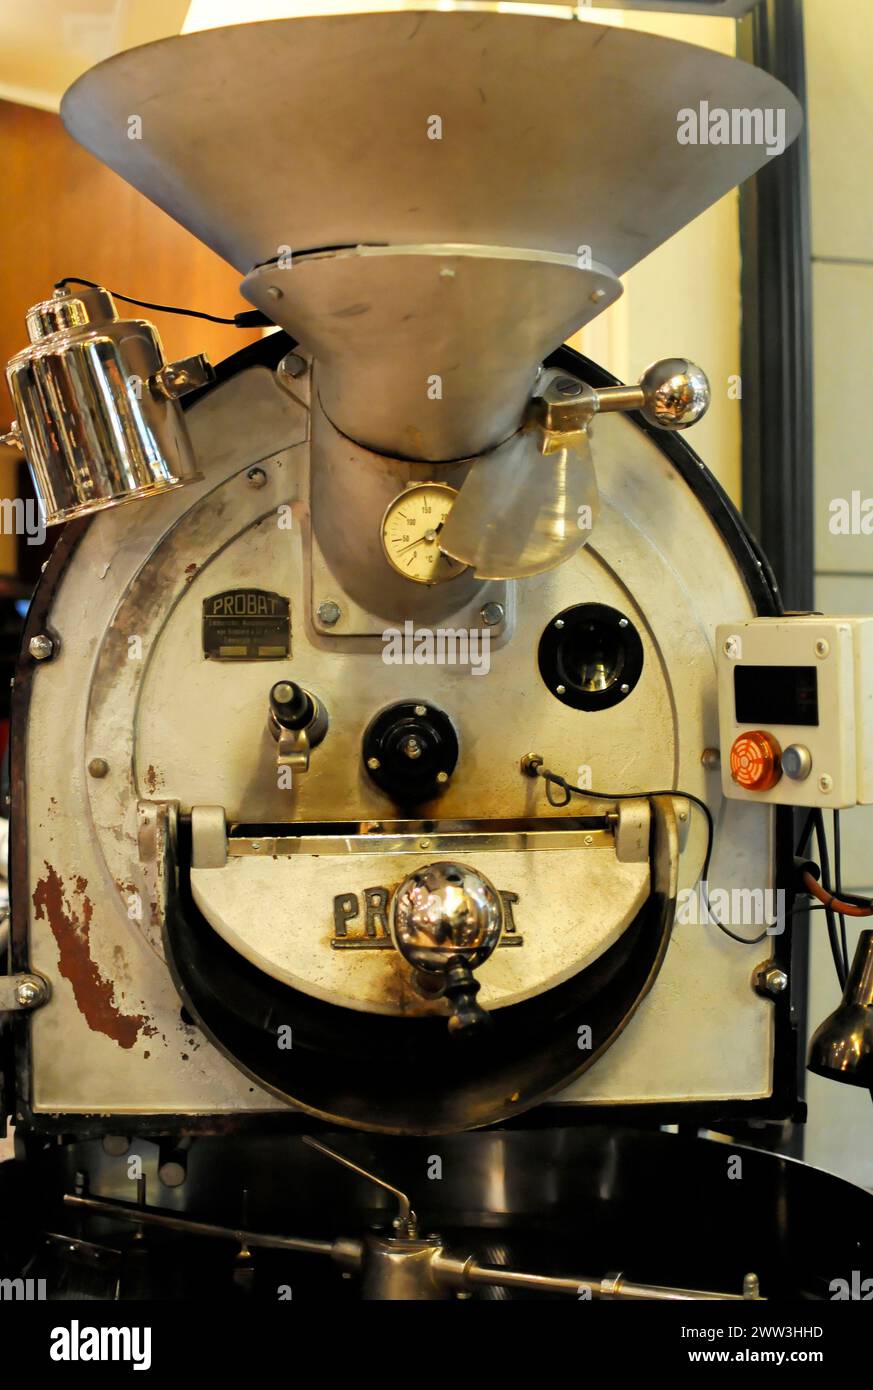 An old, classic metal coffee machine, Hamburg, Hanseatic City of Hamburg, Germany Stock Photo